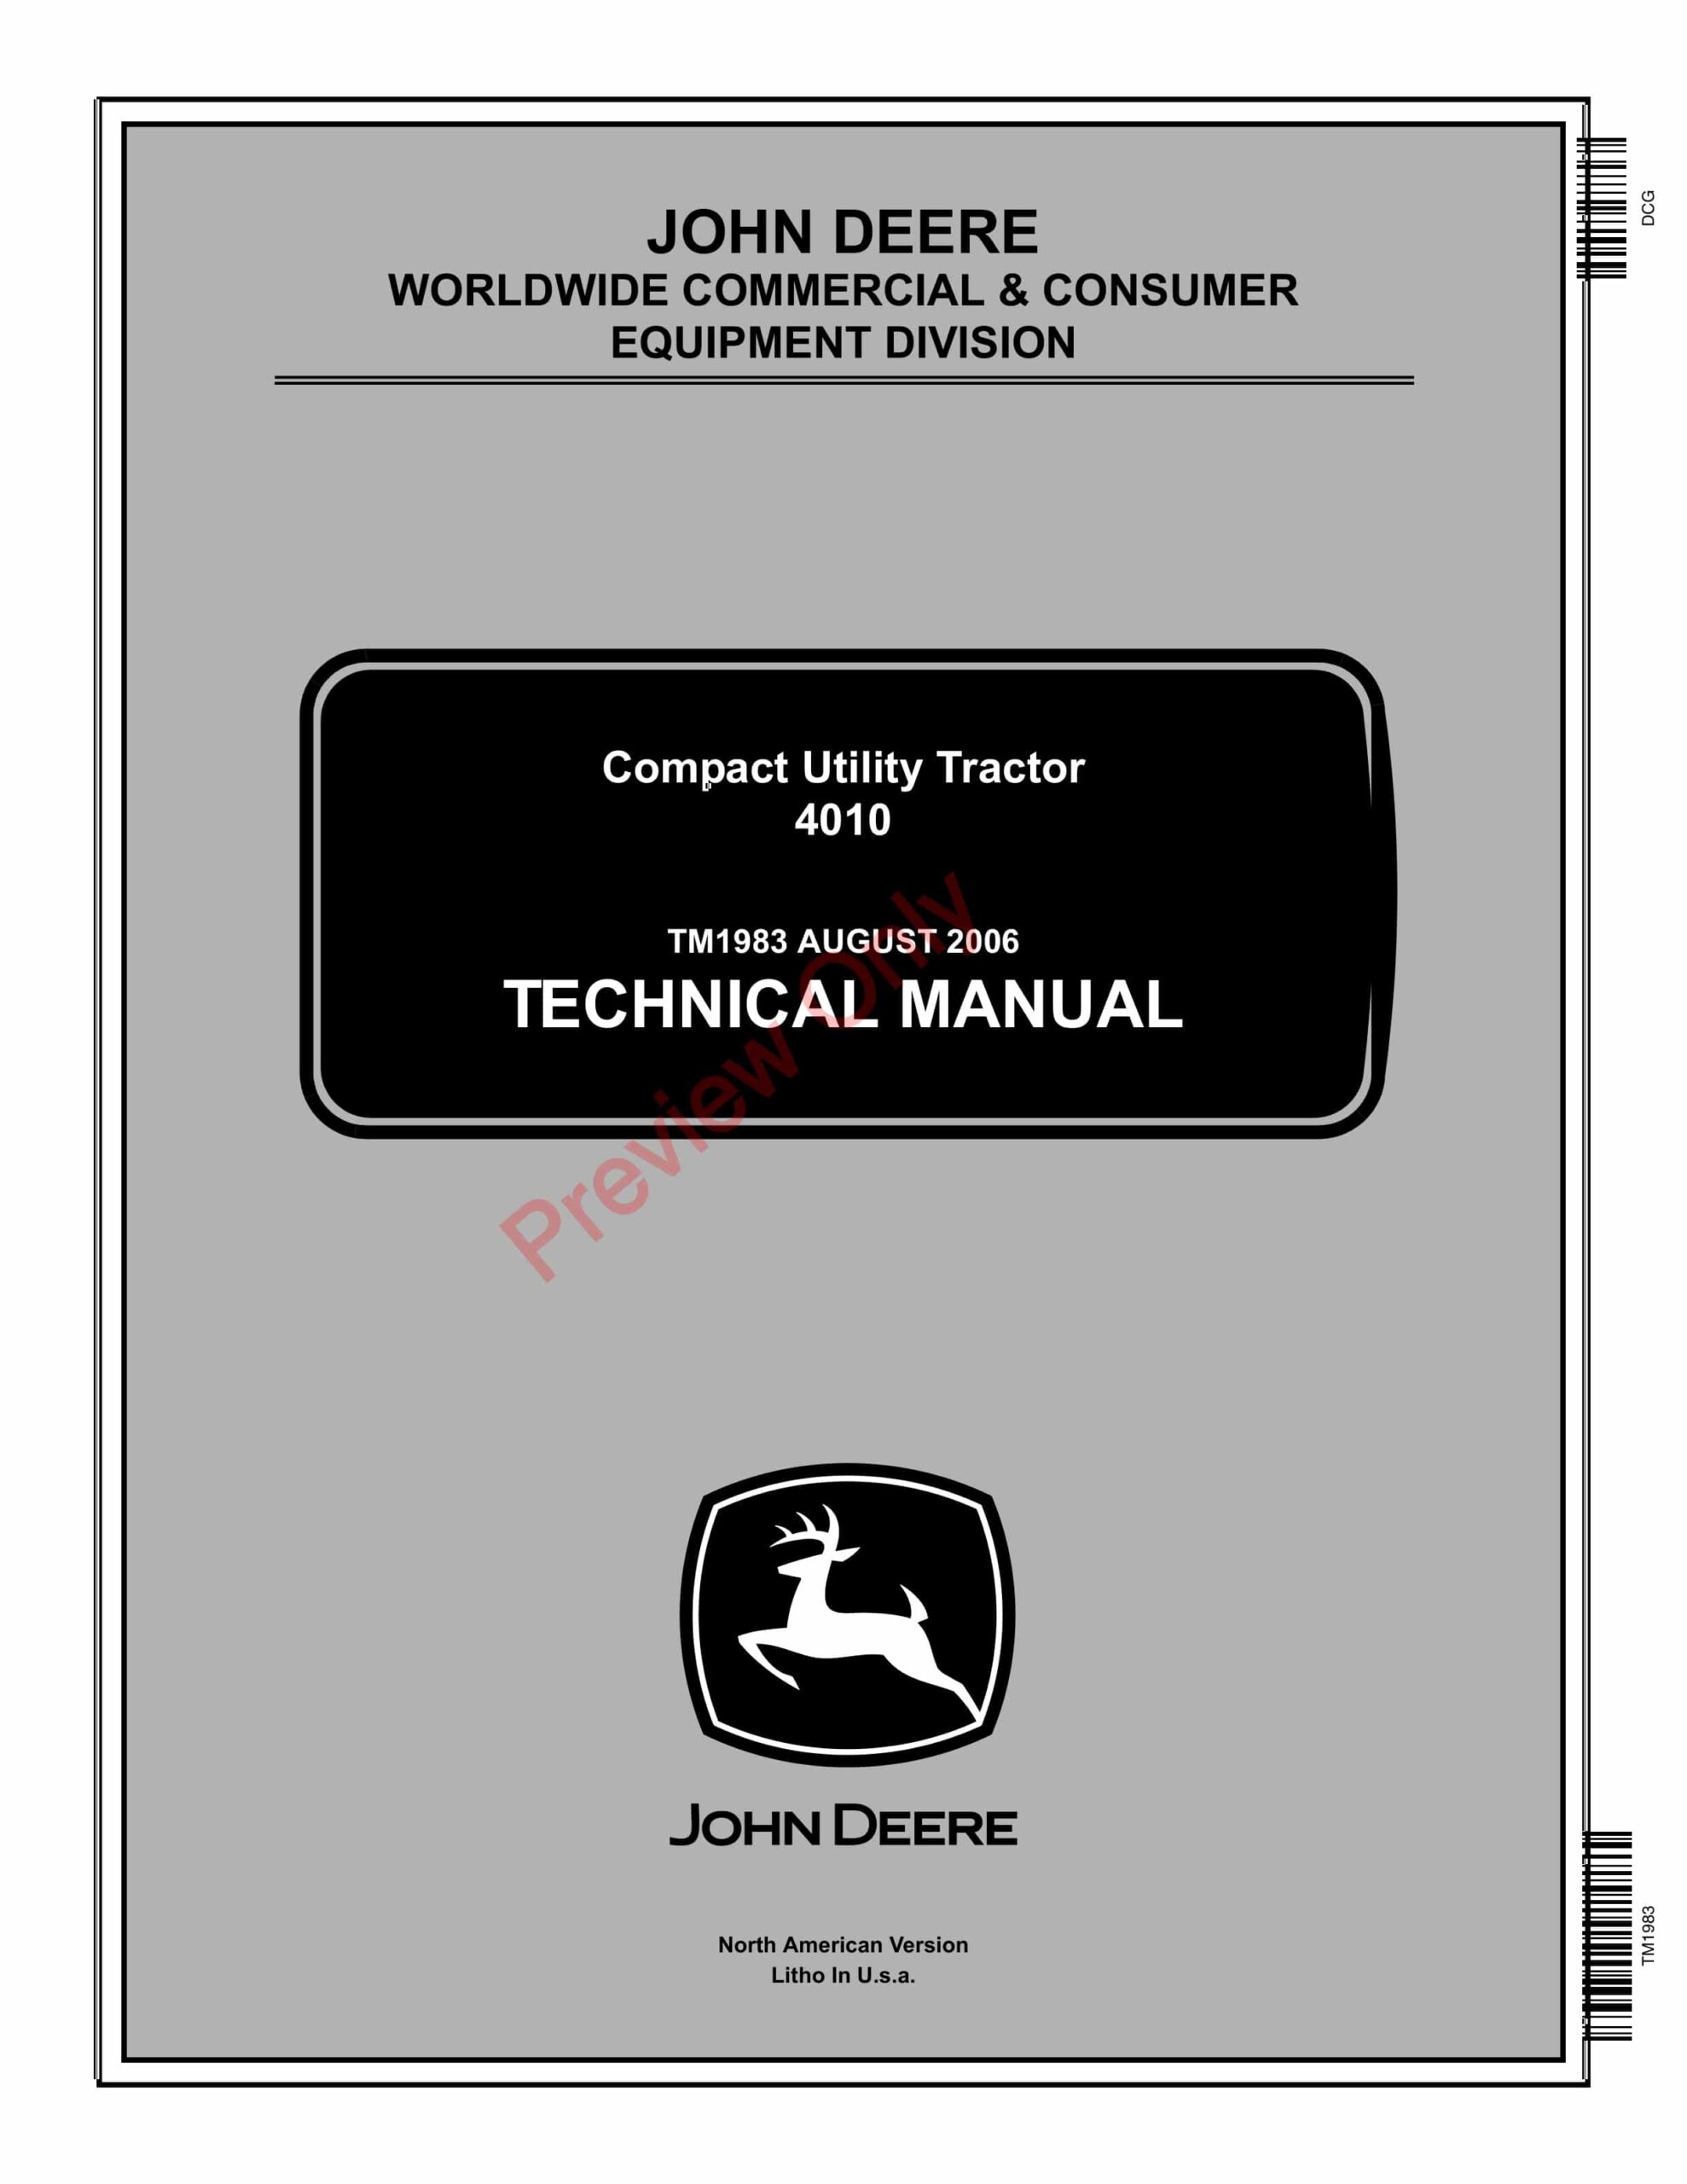 John Deere Compact Utility Tractor 4010 Technical Manual TM1983 01AUG06-1